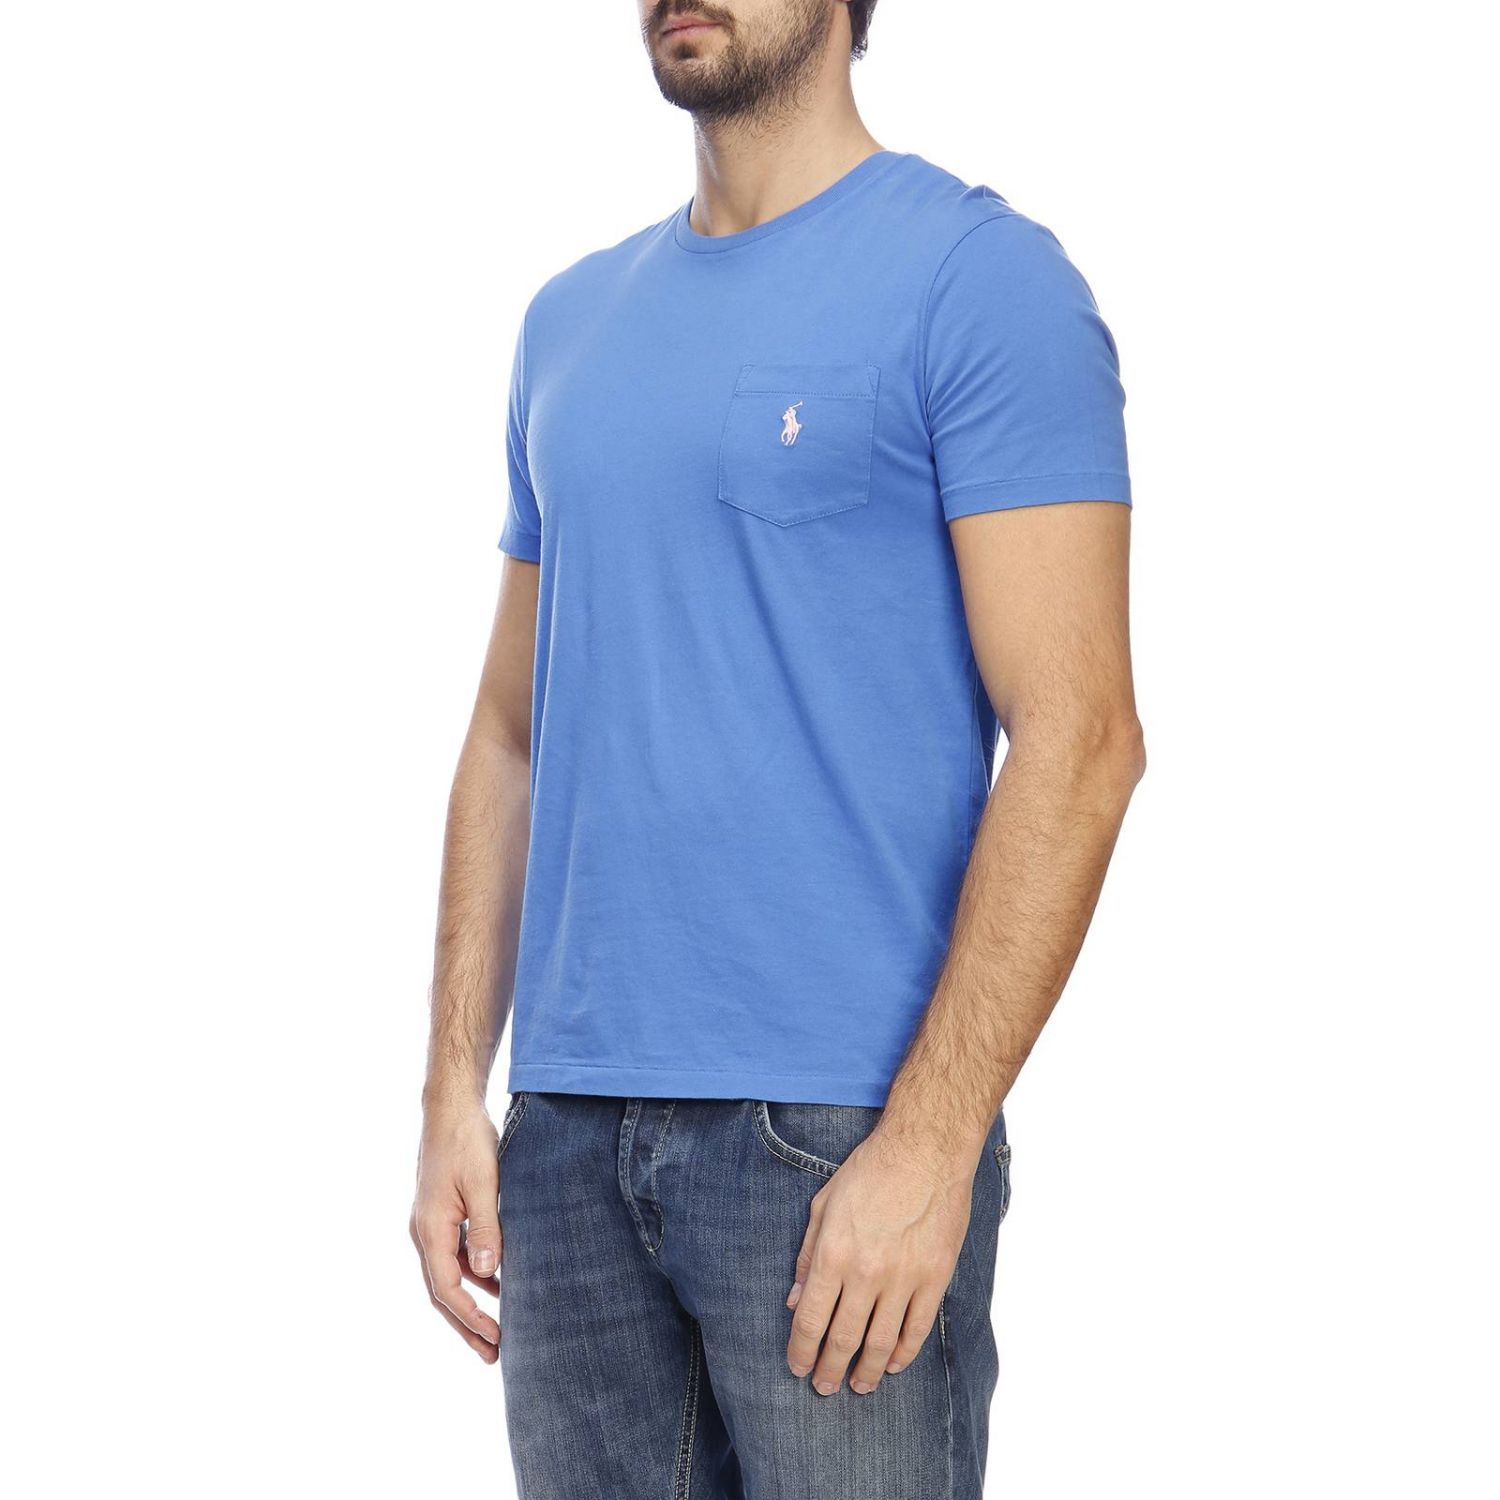 Polo Ralph Lauren Outlet: T-shirt men - Gnawed Blue | T-Shirt Polo ...